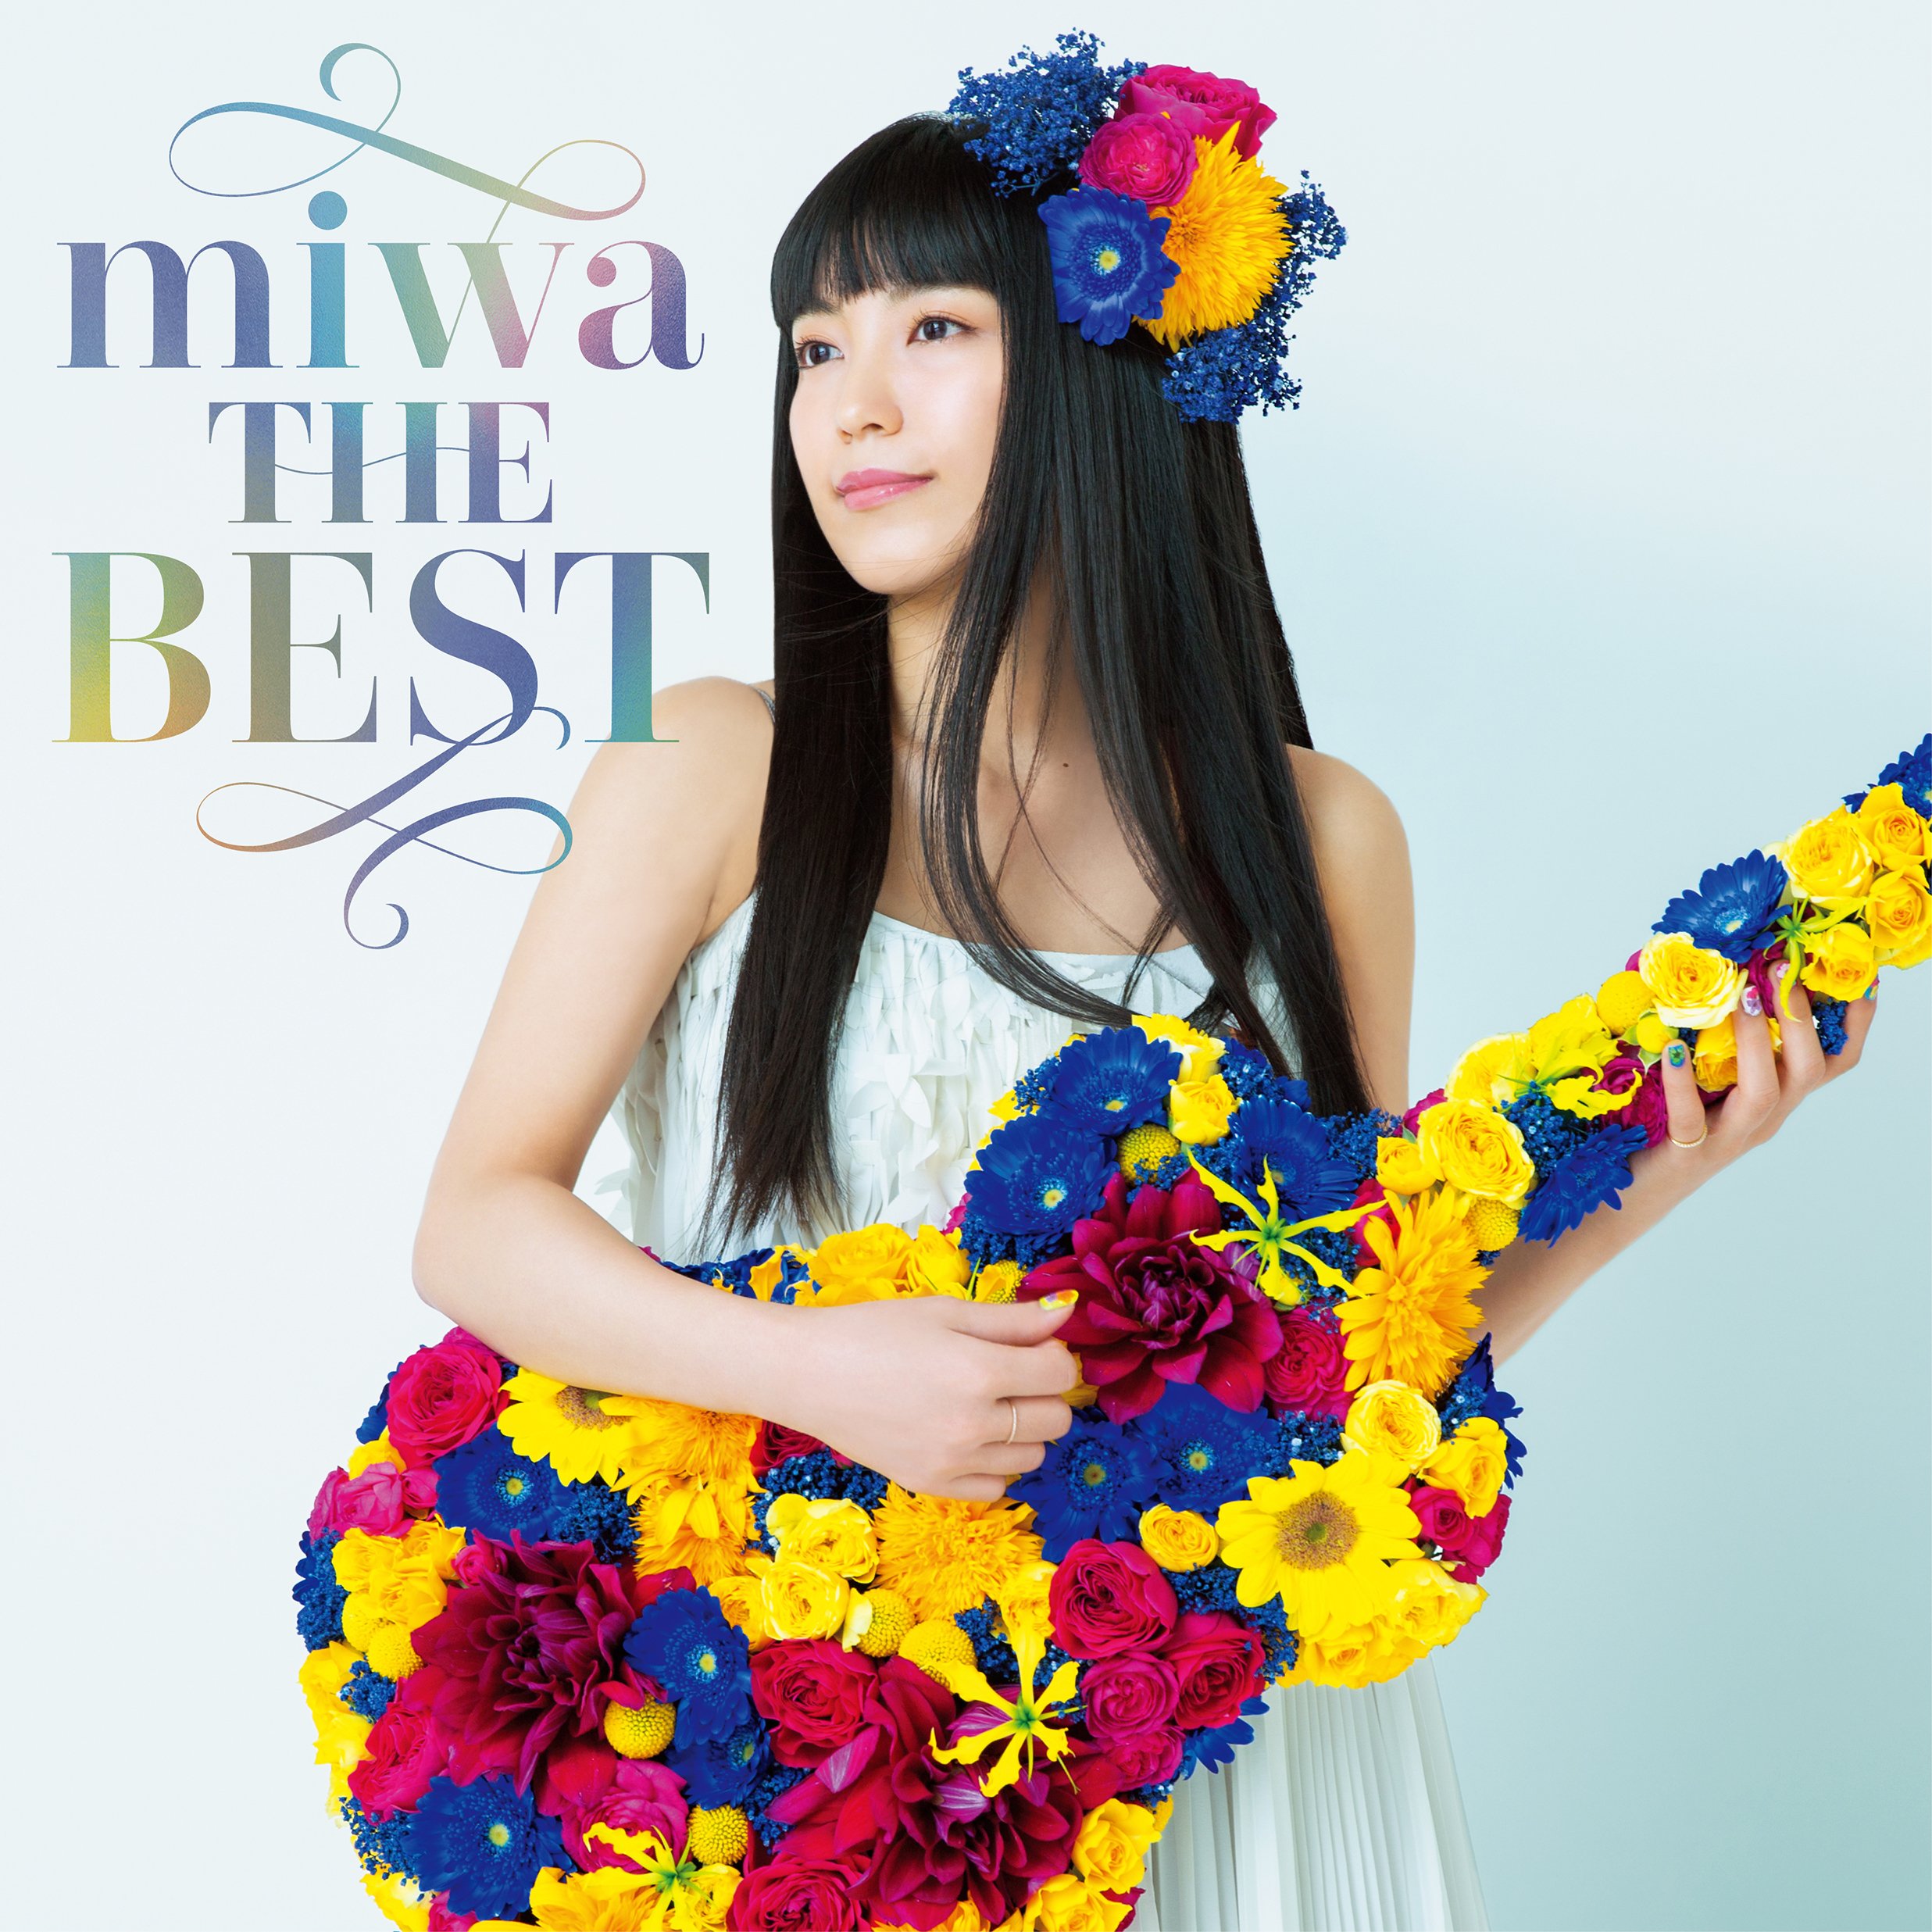 miwa – miwa THE BEST [FLAC + MP3 320 + Blu-ray ISO] [2018.07.11]